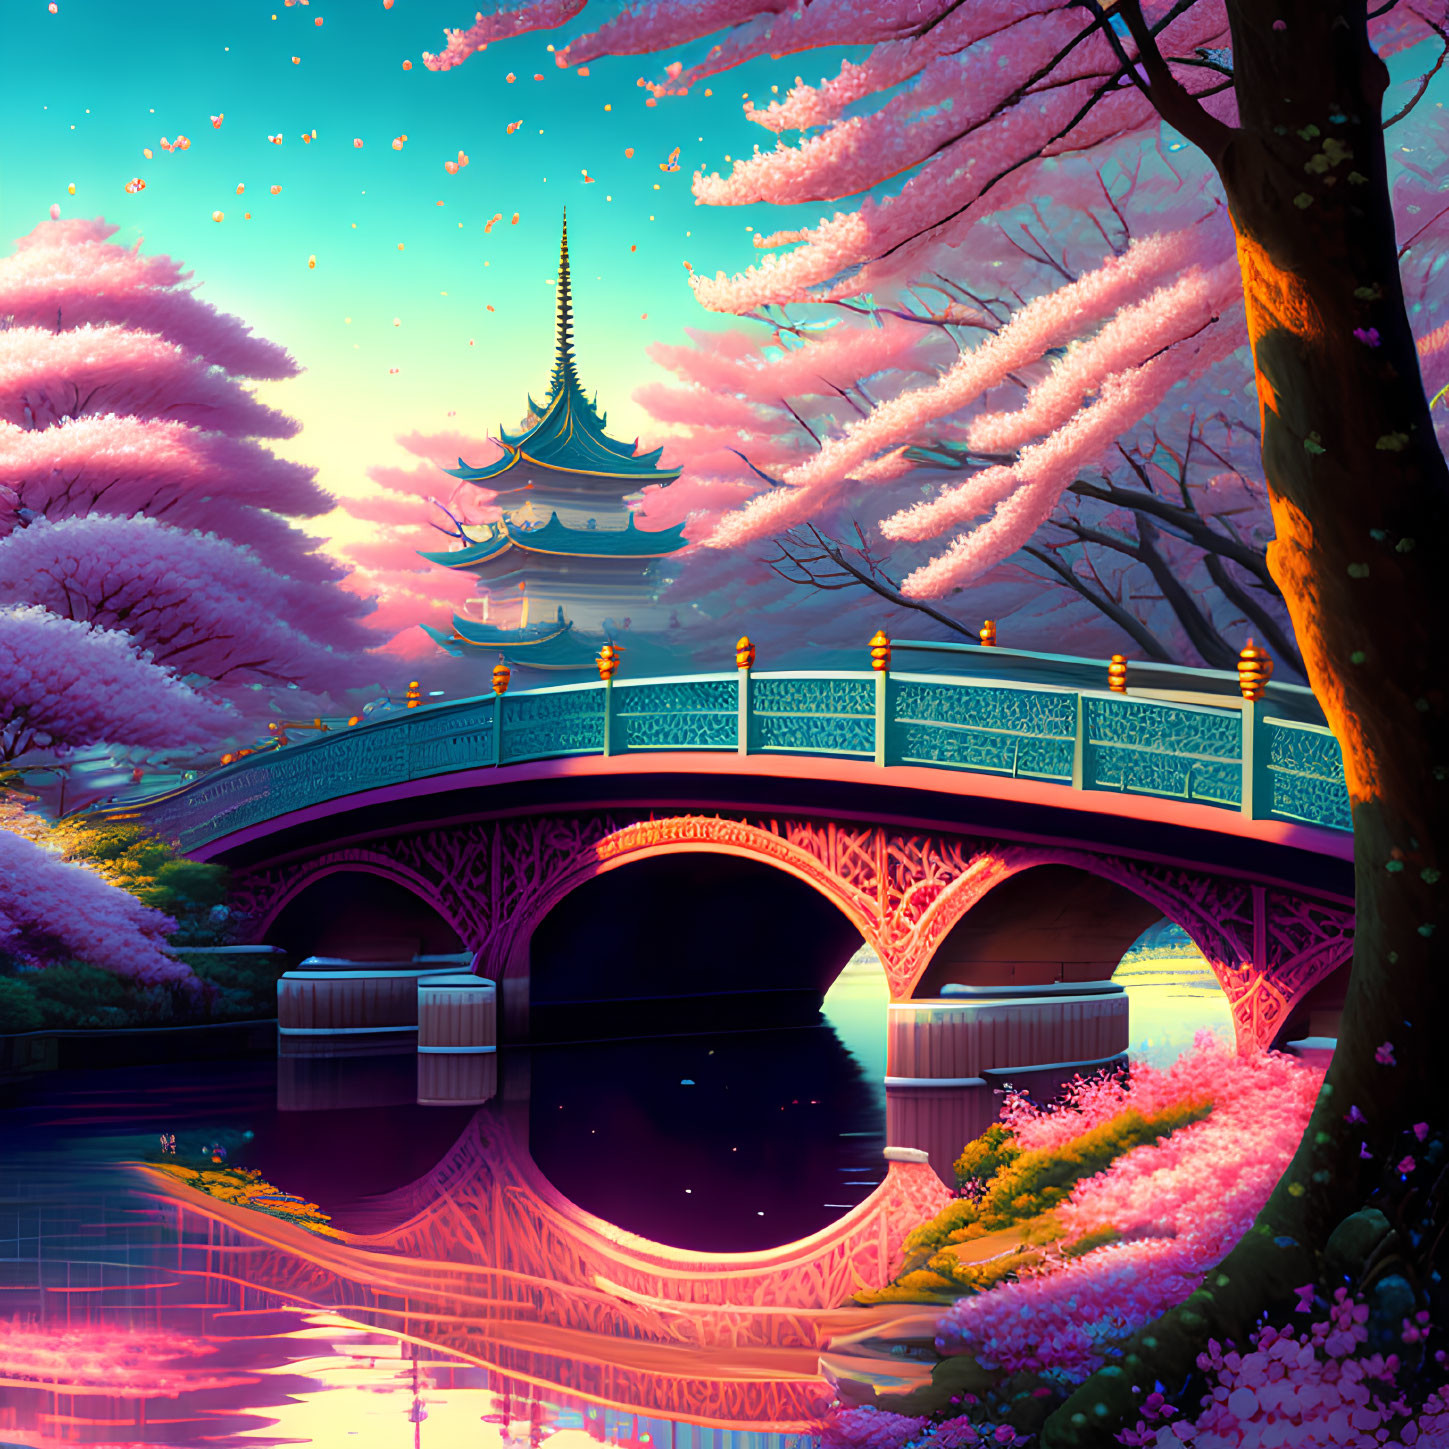 Illustration of Pagoda, Bridge, Cherry Blossoms at Twilight